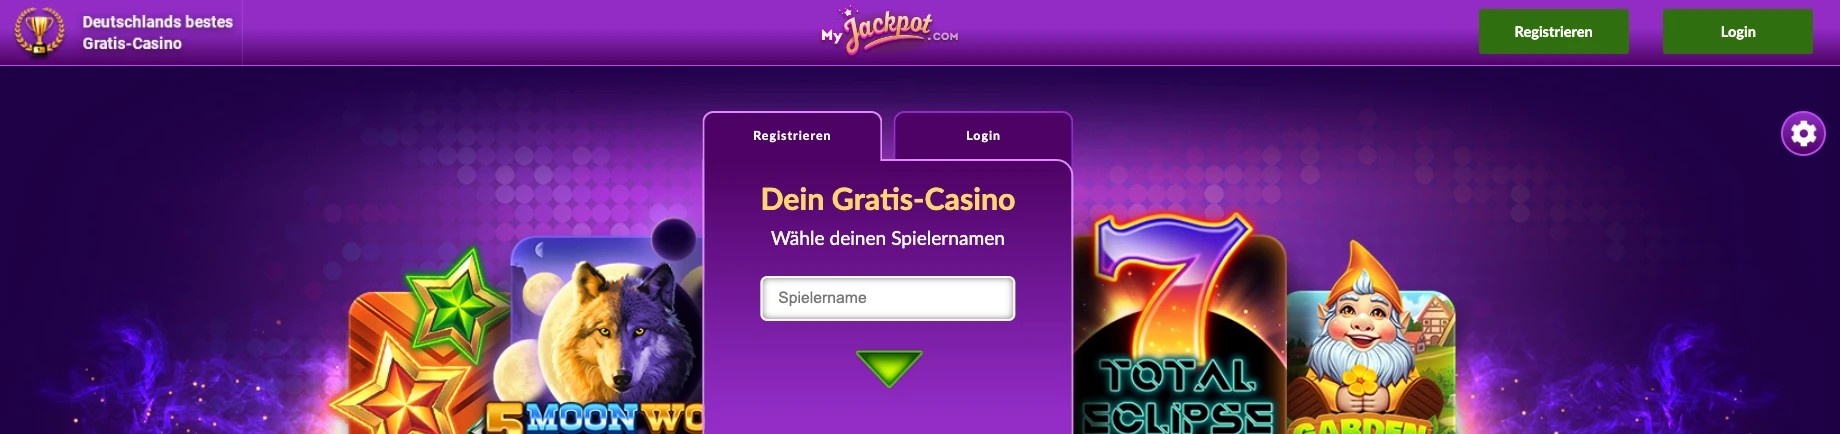 Jackpot.de